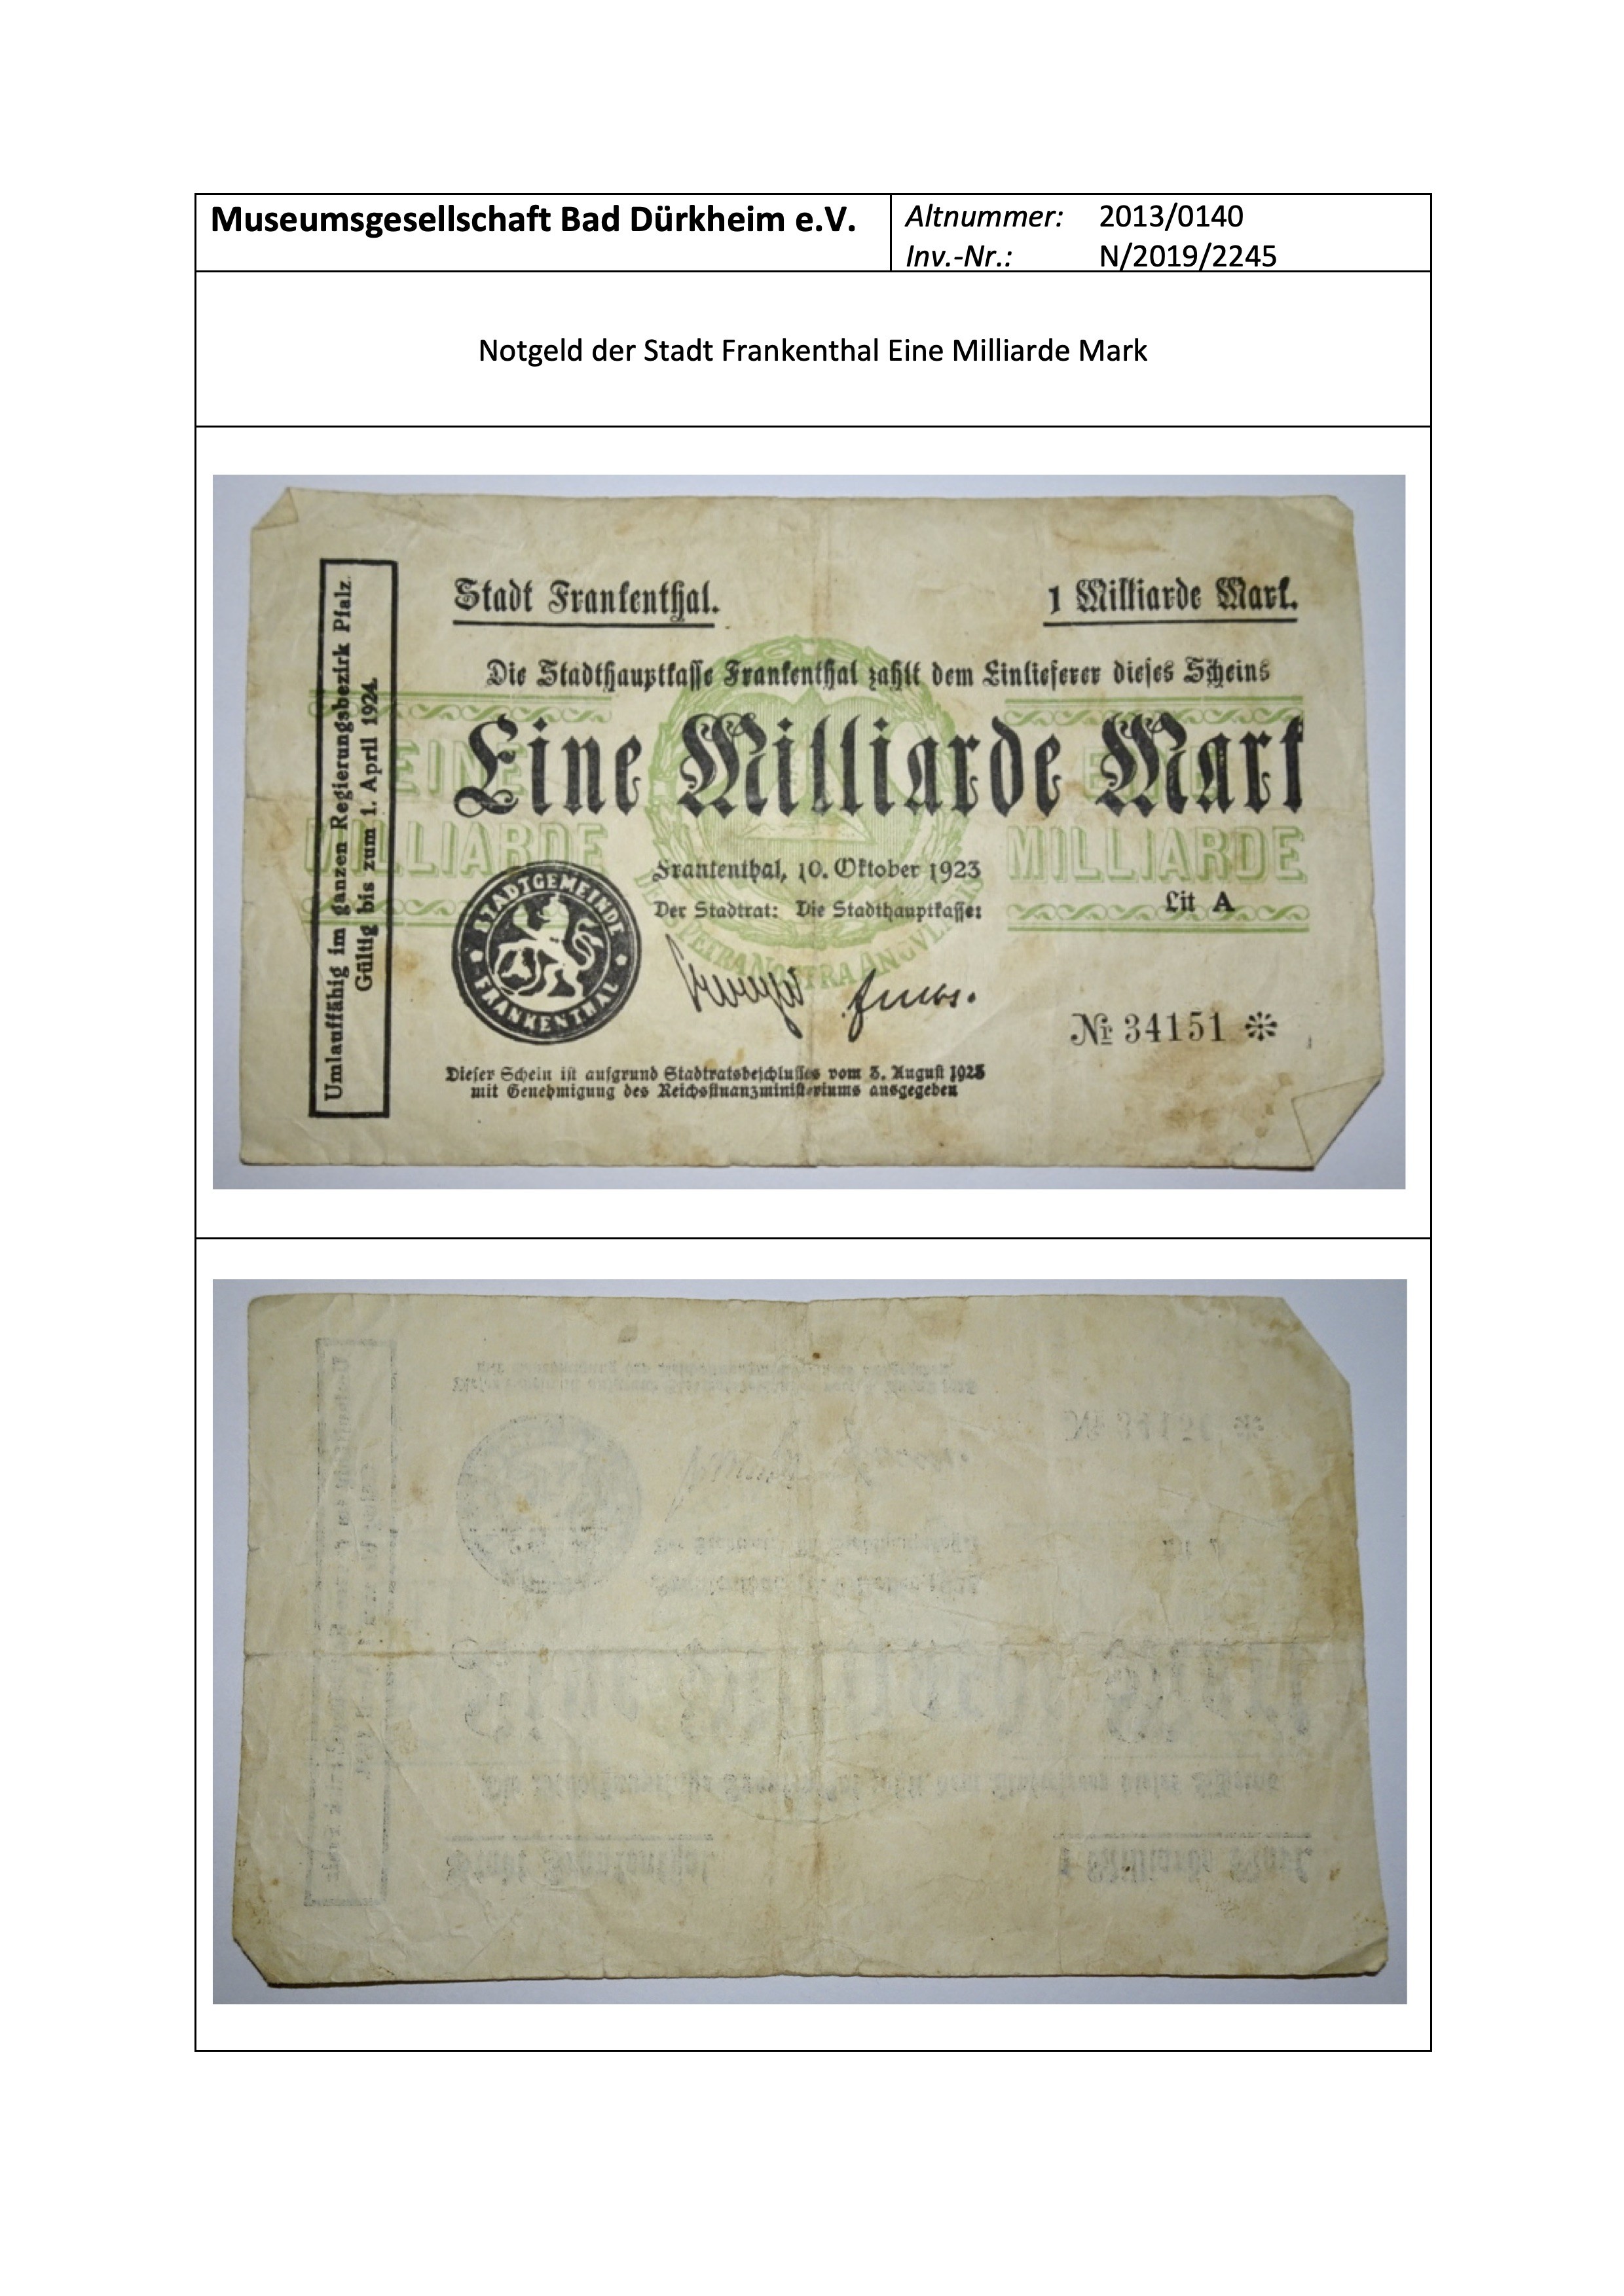 Notgeld der Stadt Frankenthal Eine Milliarde Mark (Museumsgesellschaft Bad Dürkheim e.V. CC BY-NC-SA)